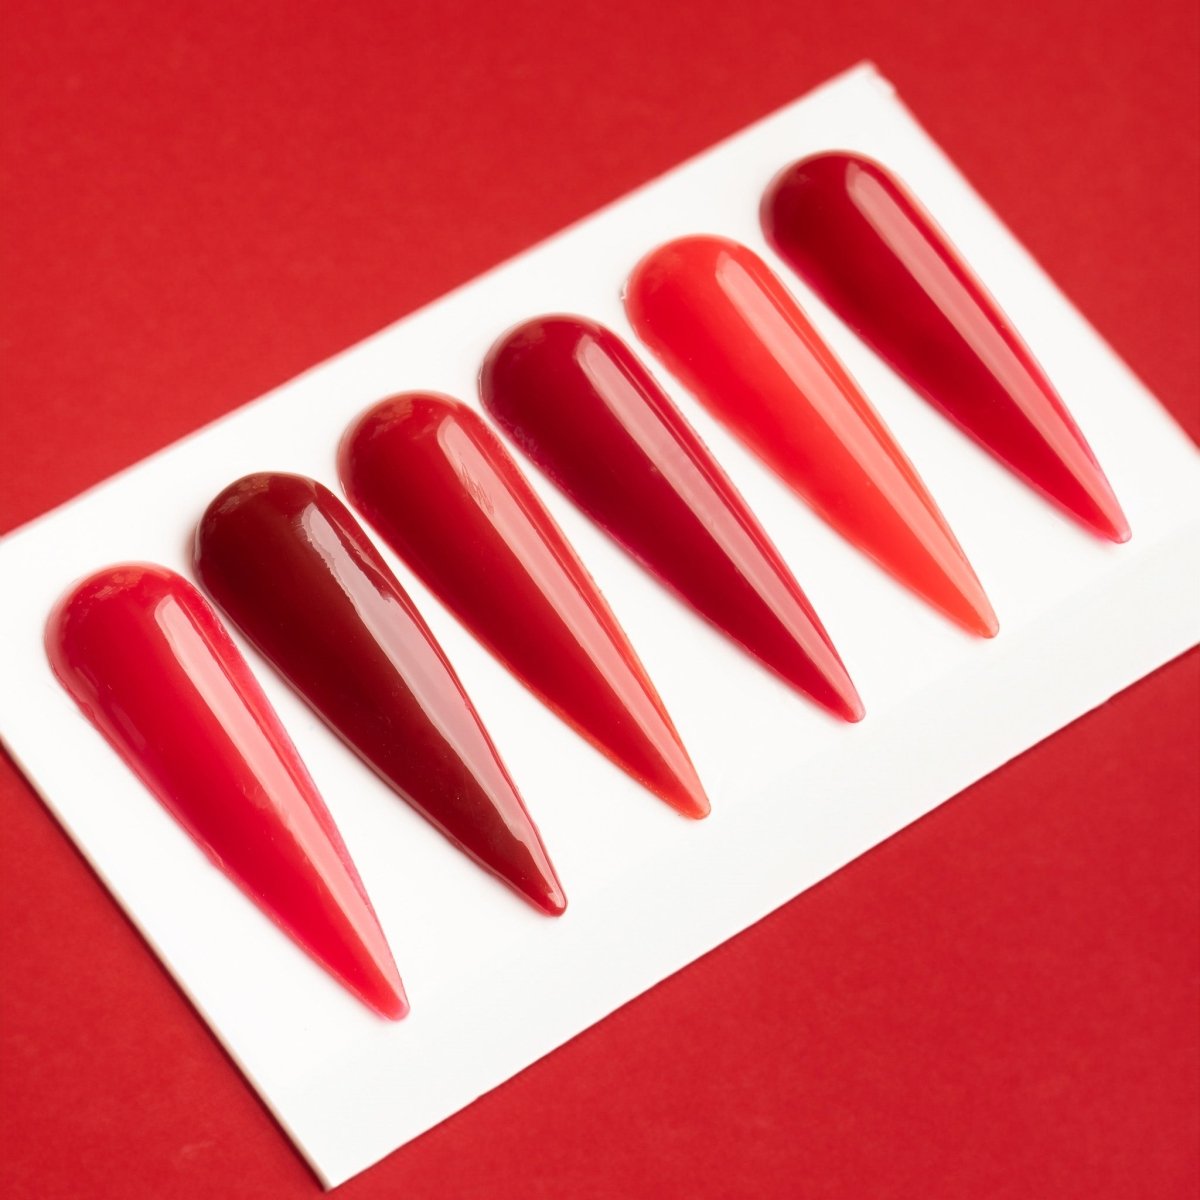 Retro Red - Hey Beautiful Nail Supplies